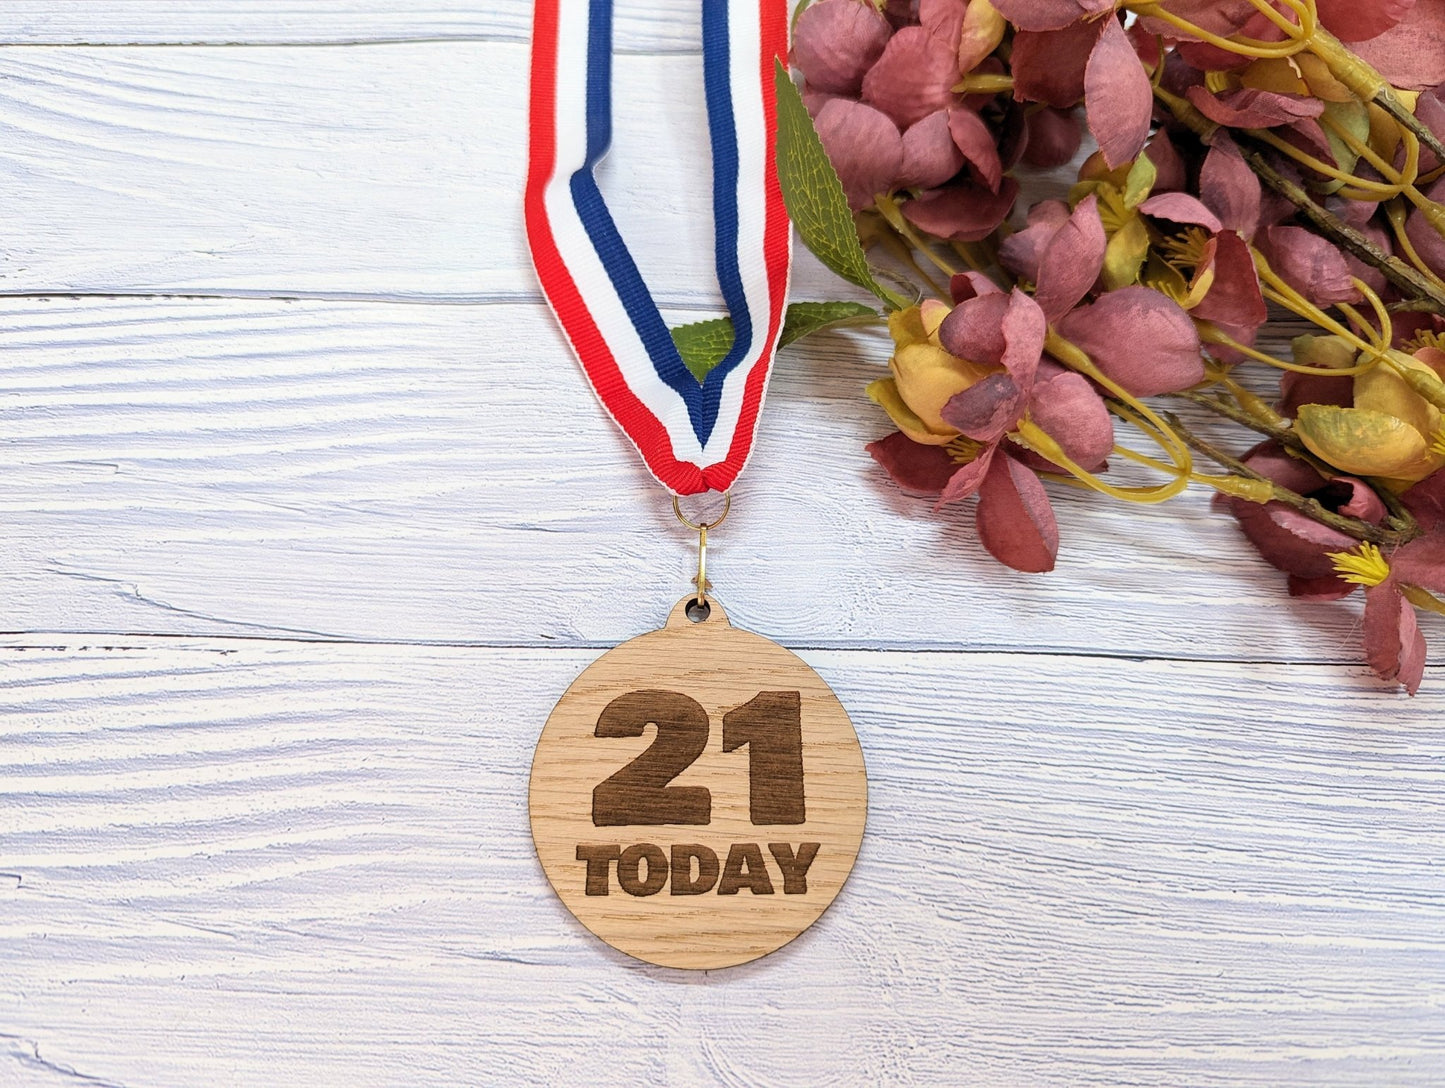 21 Today Birthday Medal - Commemorate Your Milestone 21st Birthday - Eco-Friendly Keepsake - Perfect for Celebrations - CherryGroveCraft